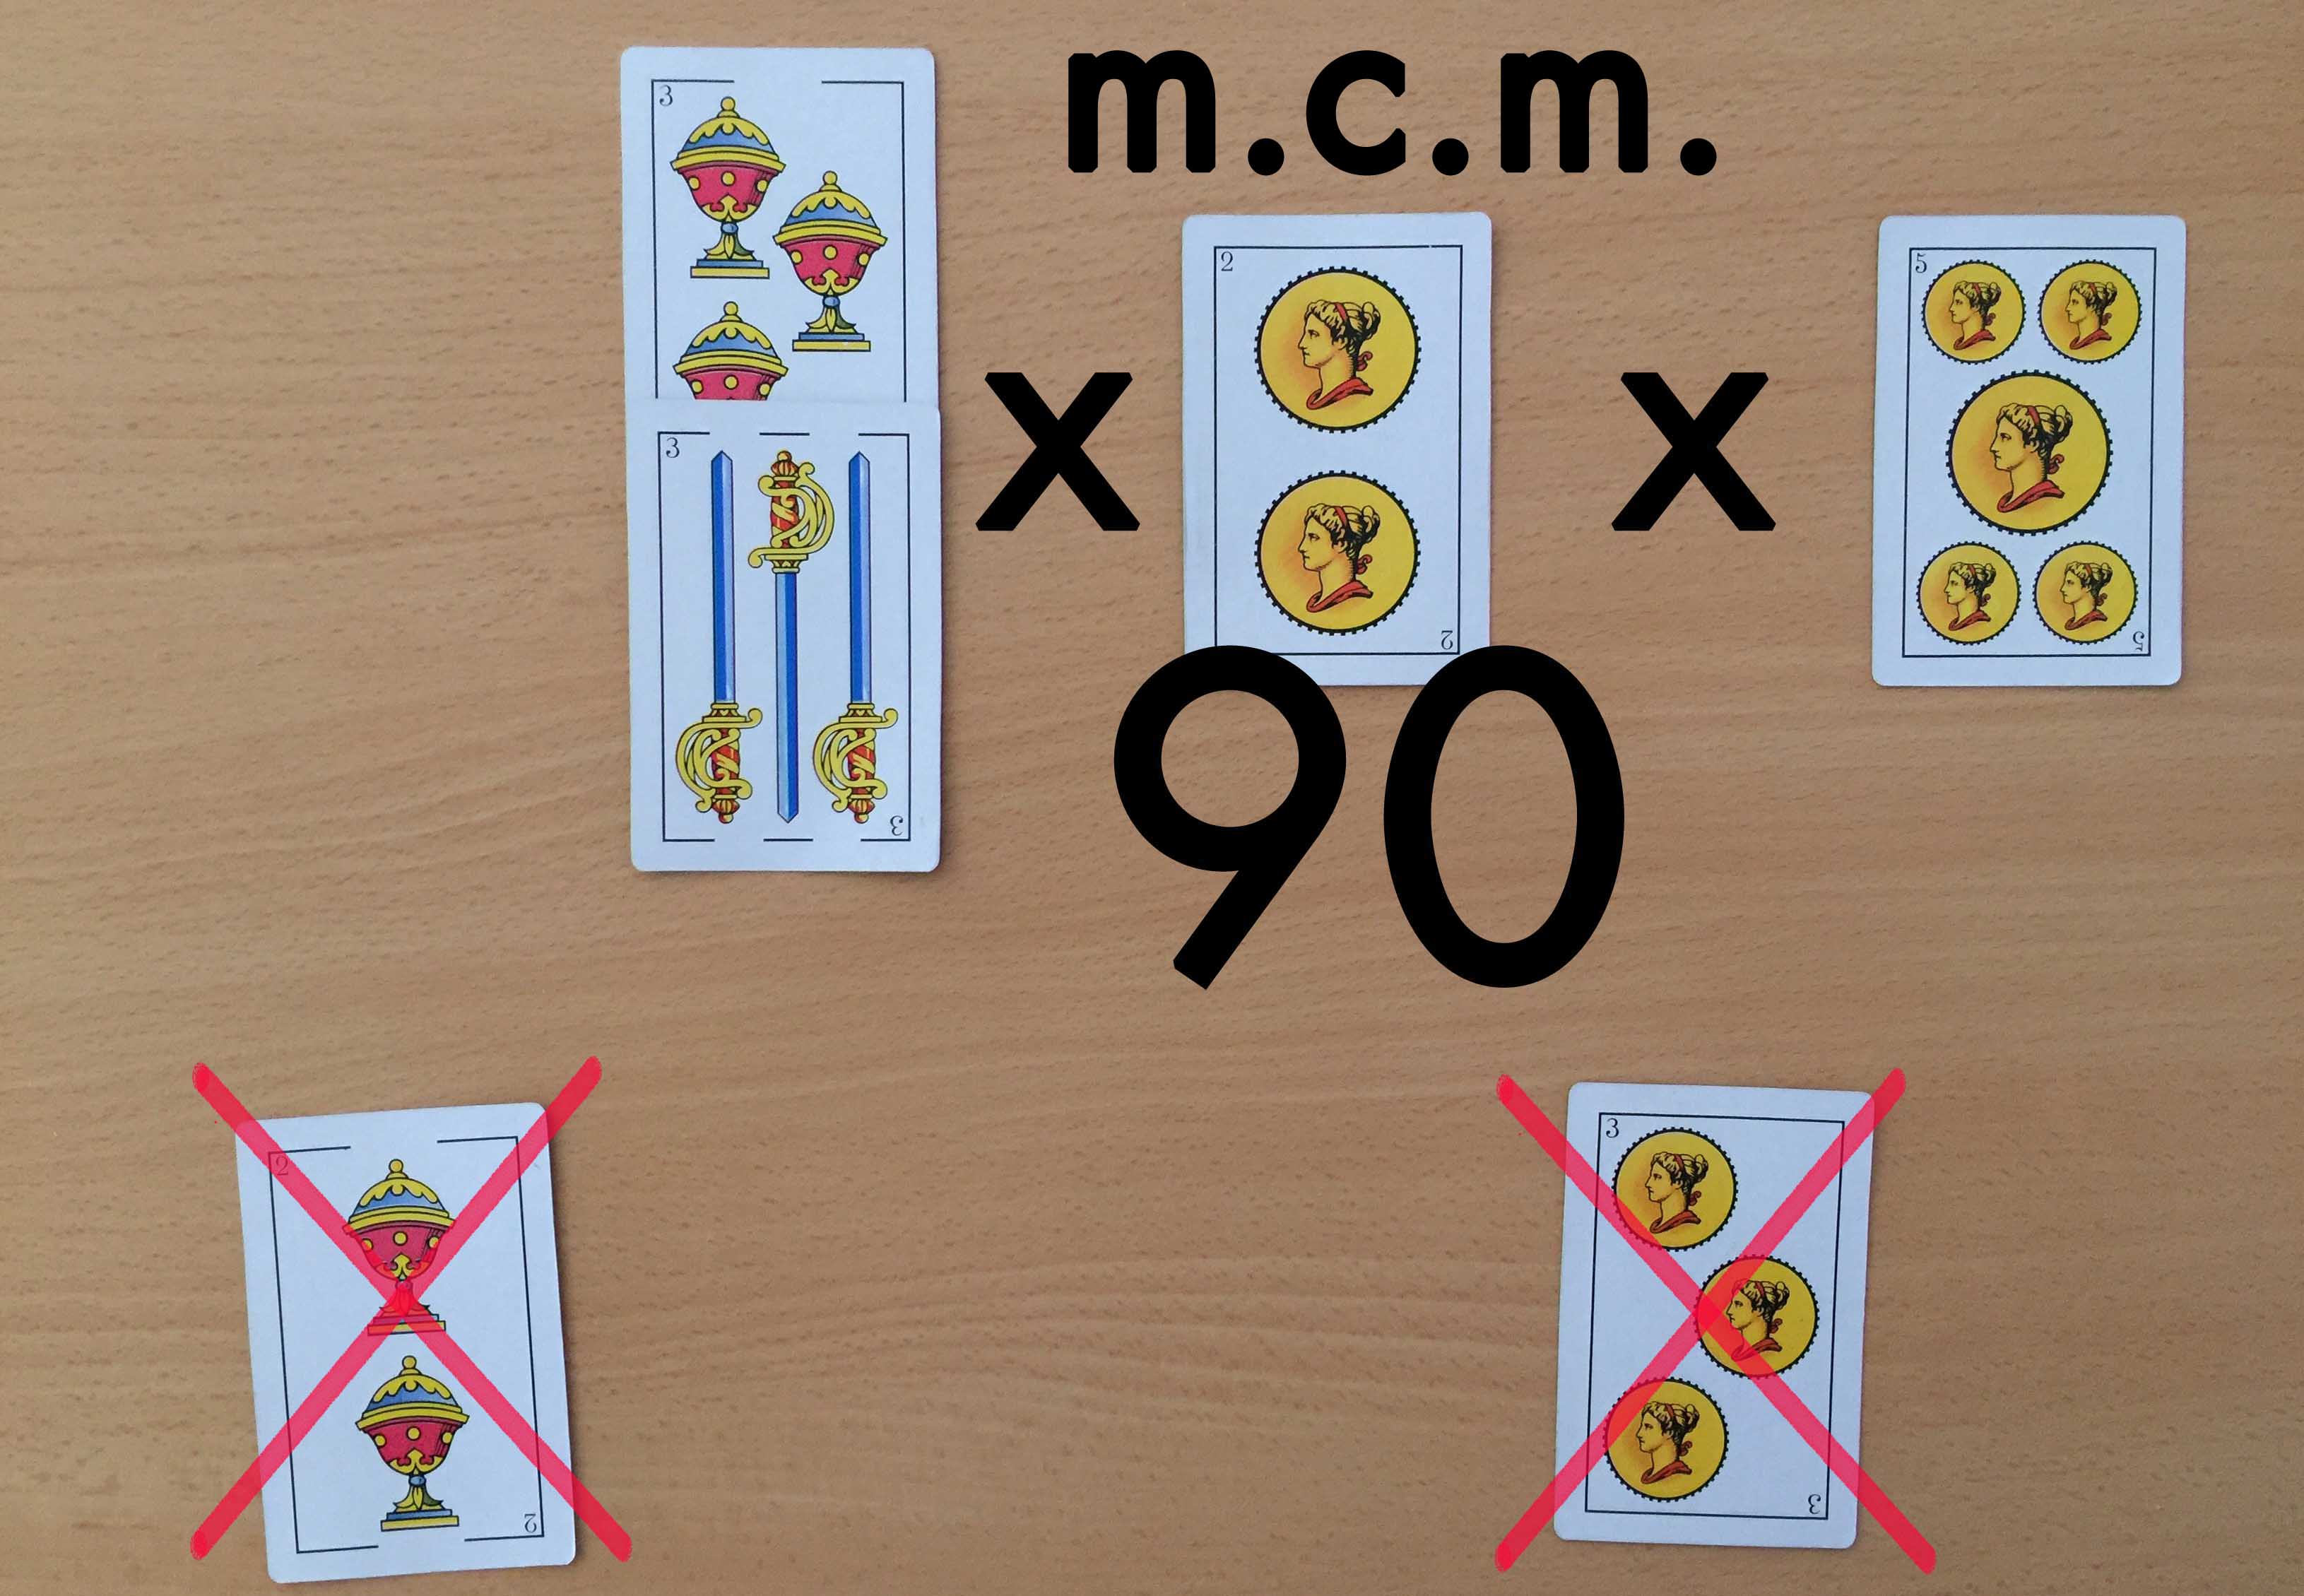 mcm-04